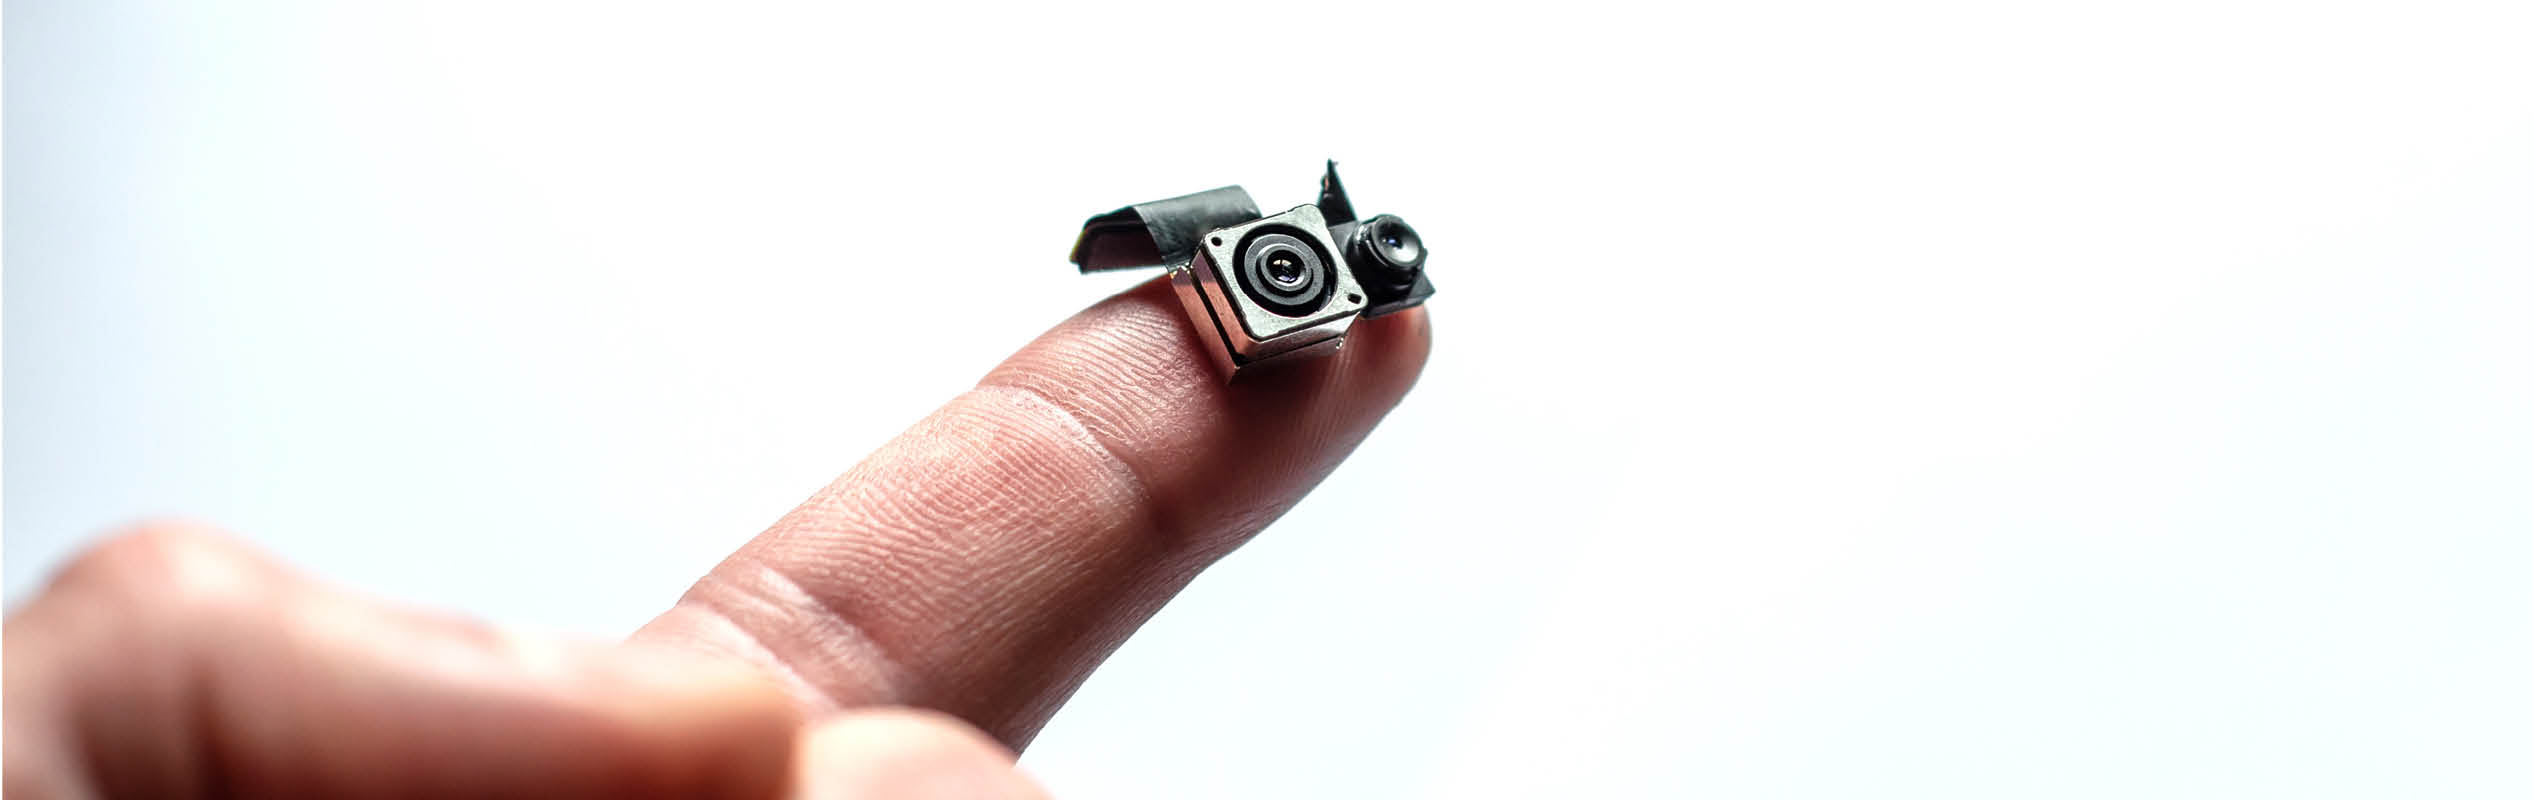 Finger mit Mikro-Kamera, ein Projekt des Bachelorstudiums Mikrotechnik an der OST